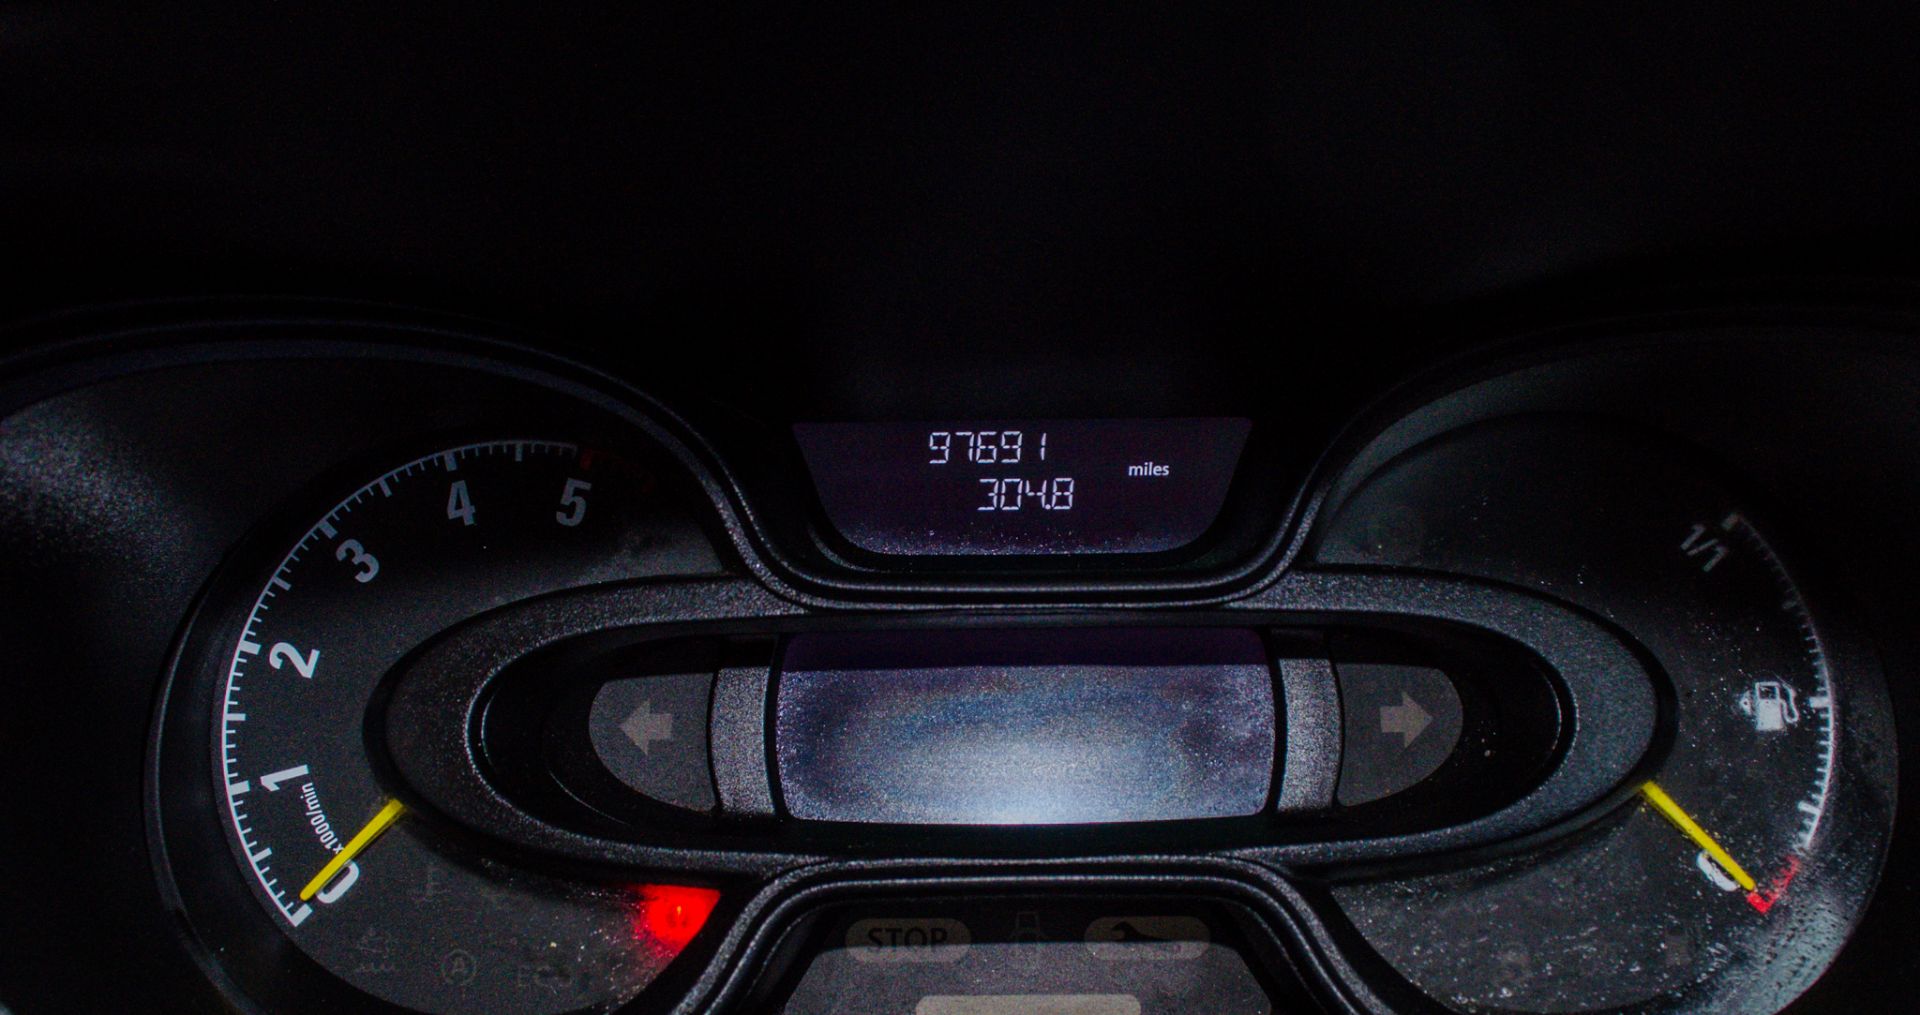 Vauxhall Vivaro 2900 cdti 1.6 diesel LWB panel van Reg No: MW16 PNY Date of Registration: 29/06/2016 - Image 27 of 27